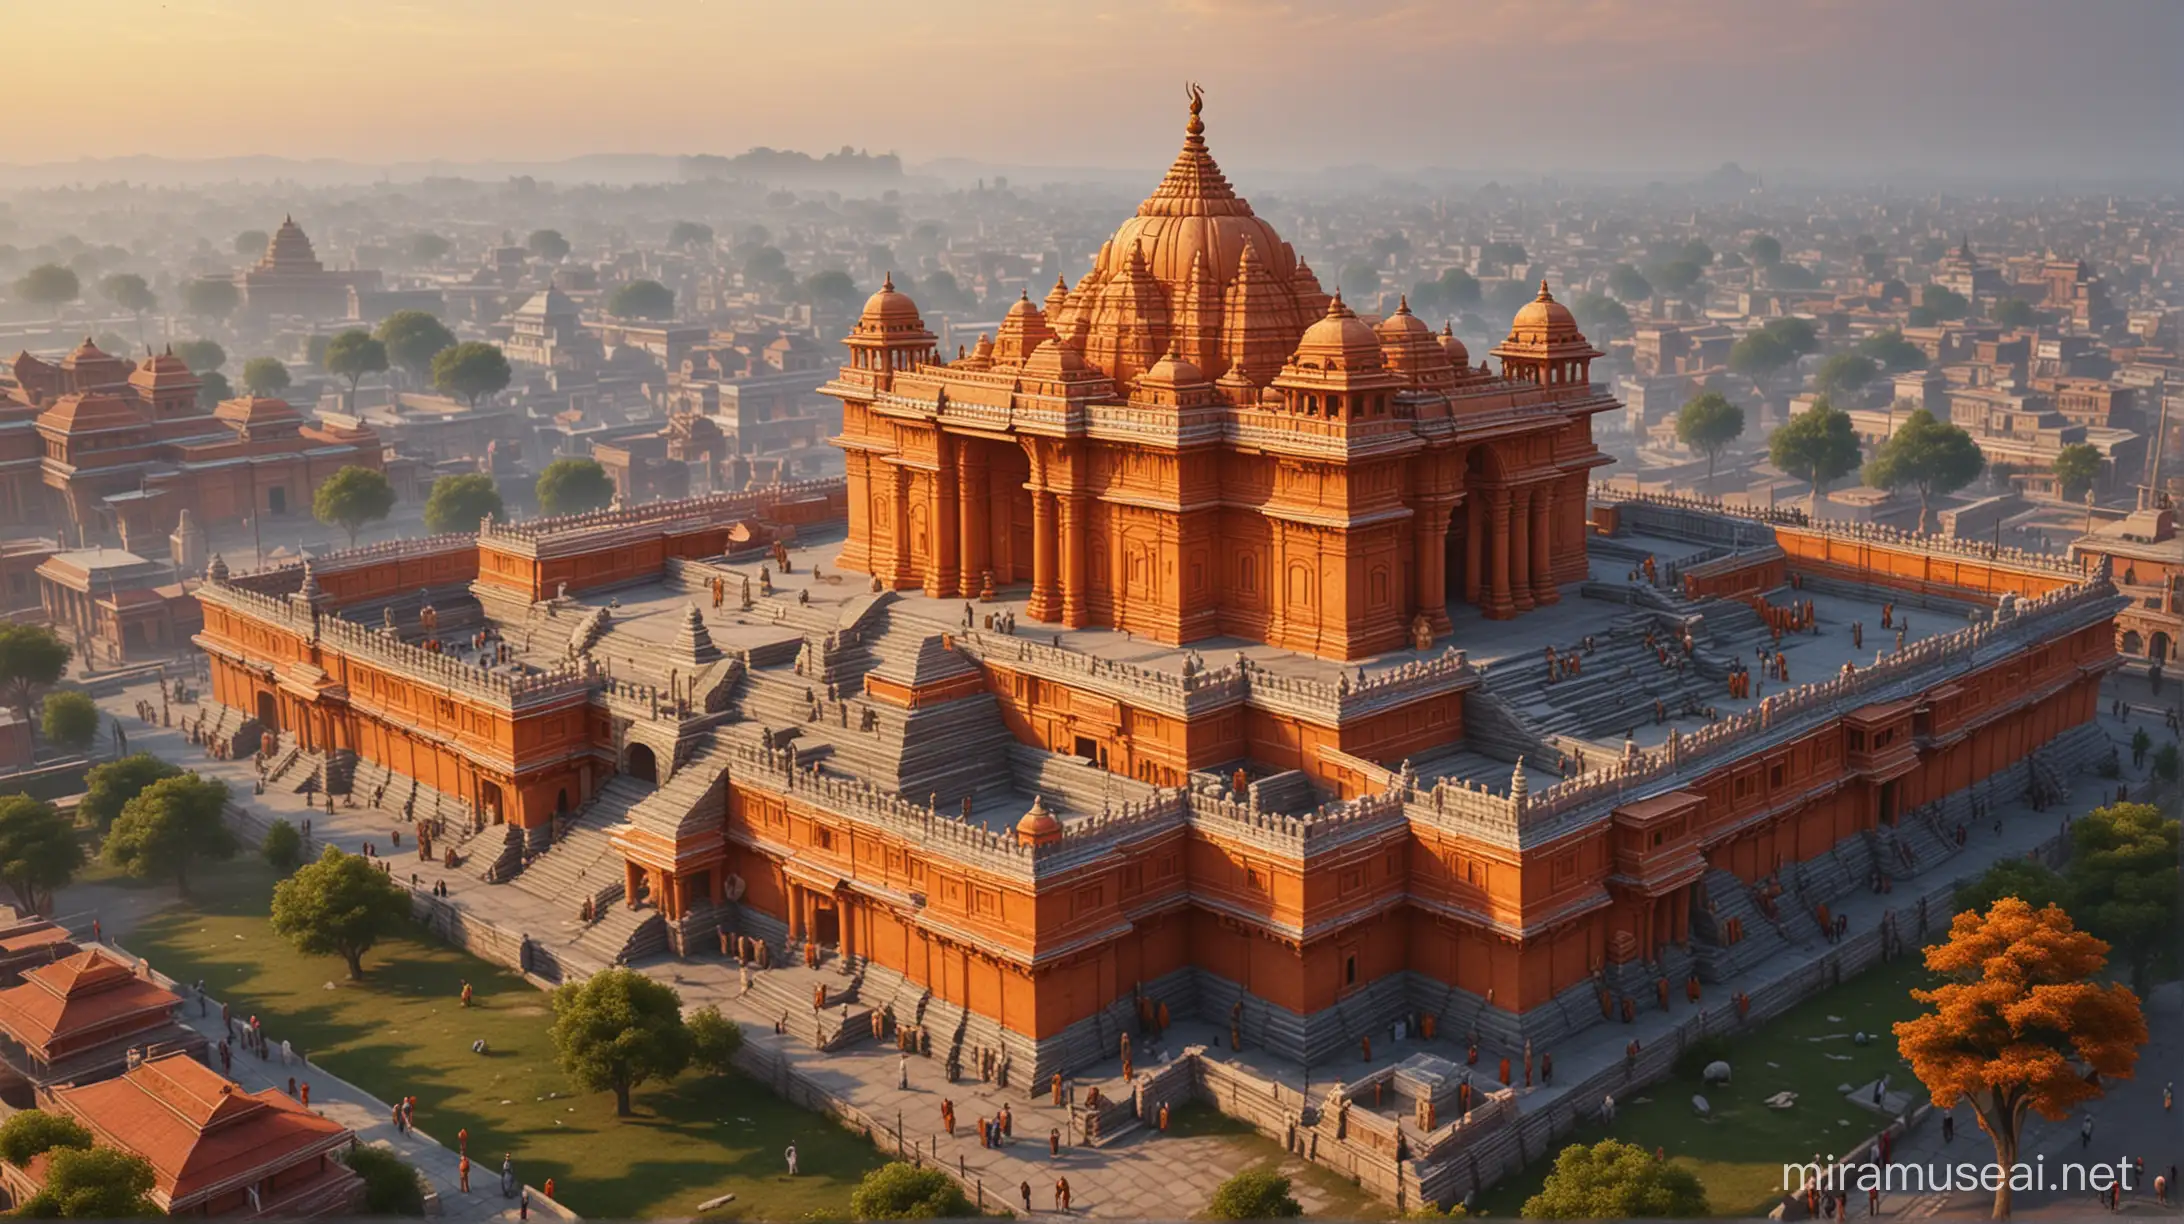 Ultra Realistic Ayodhya Ram Mandir Image Vivid Colors and Impressive Detailing